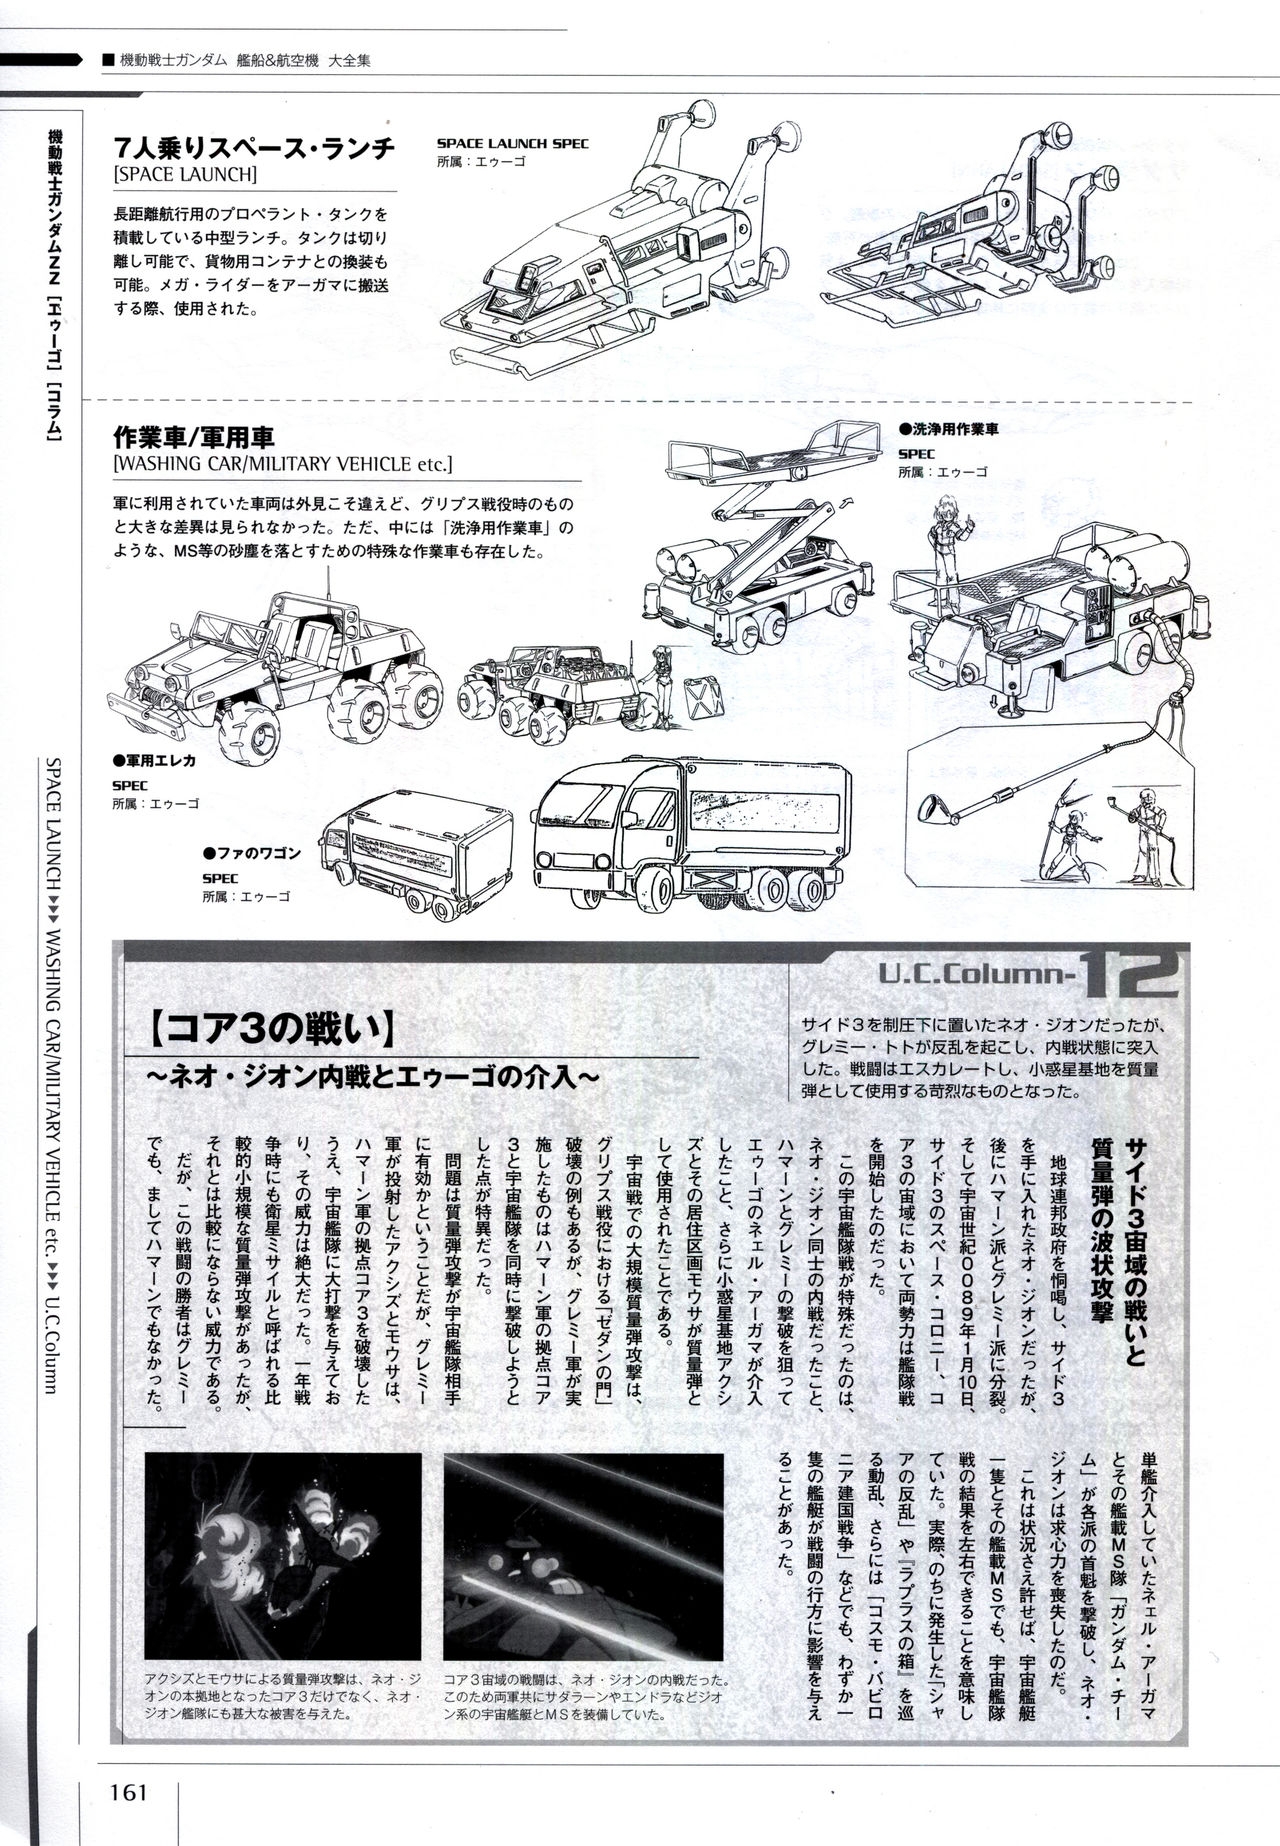 Mobile Suit Gundam - Ship & Aerospace Plane Encyclopedia - Revised Edition 166